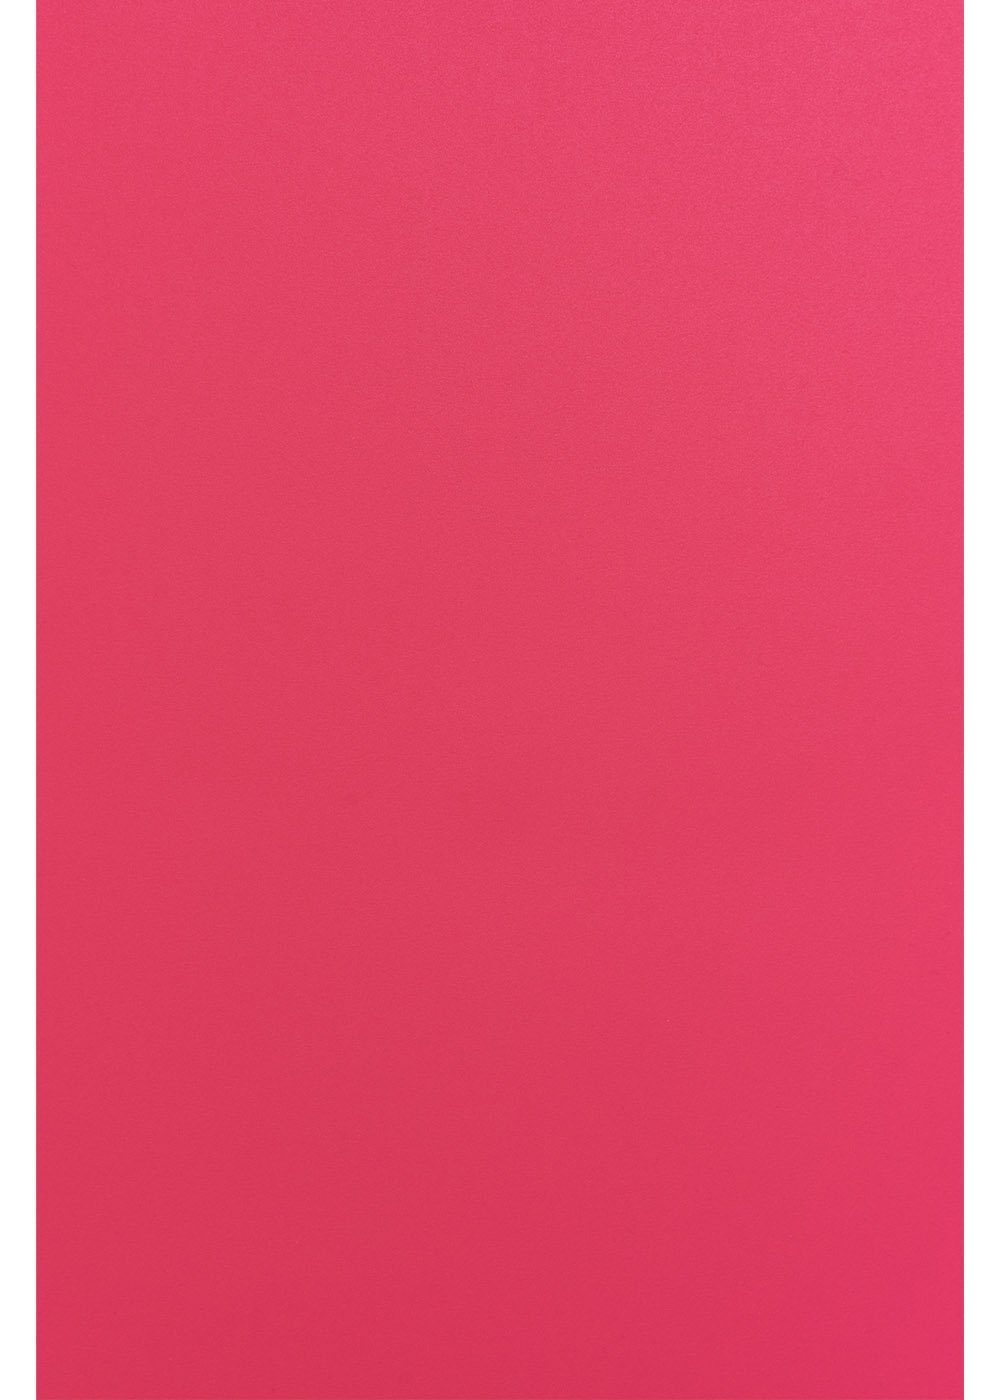 Hilltop Transparentpapier Reflektierende Transferfolie, Textilfolie, mehrfarbig, 30x20 cm Neon Rosa